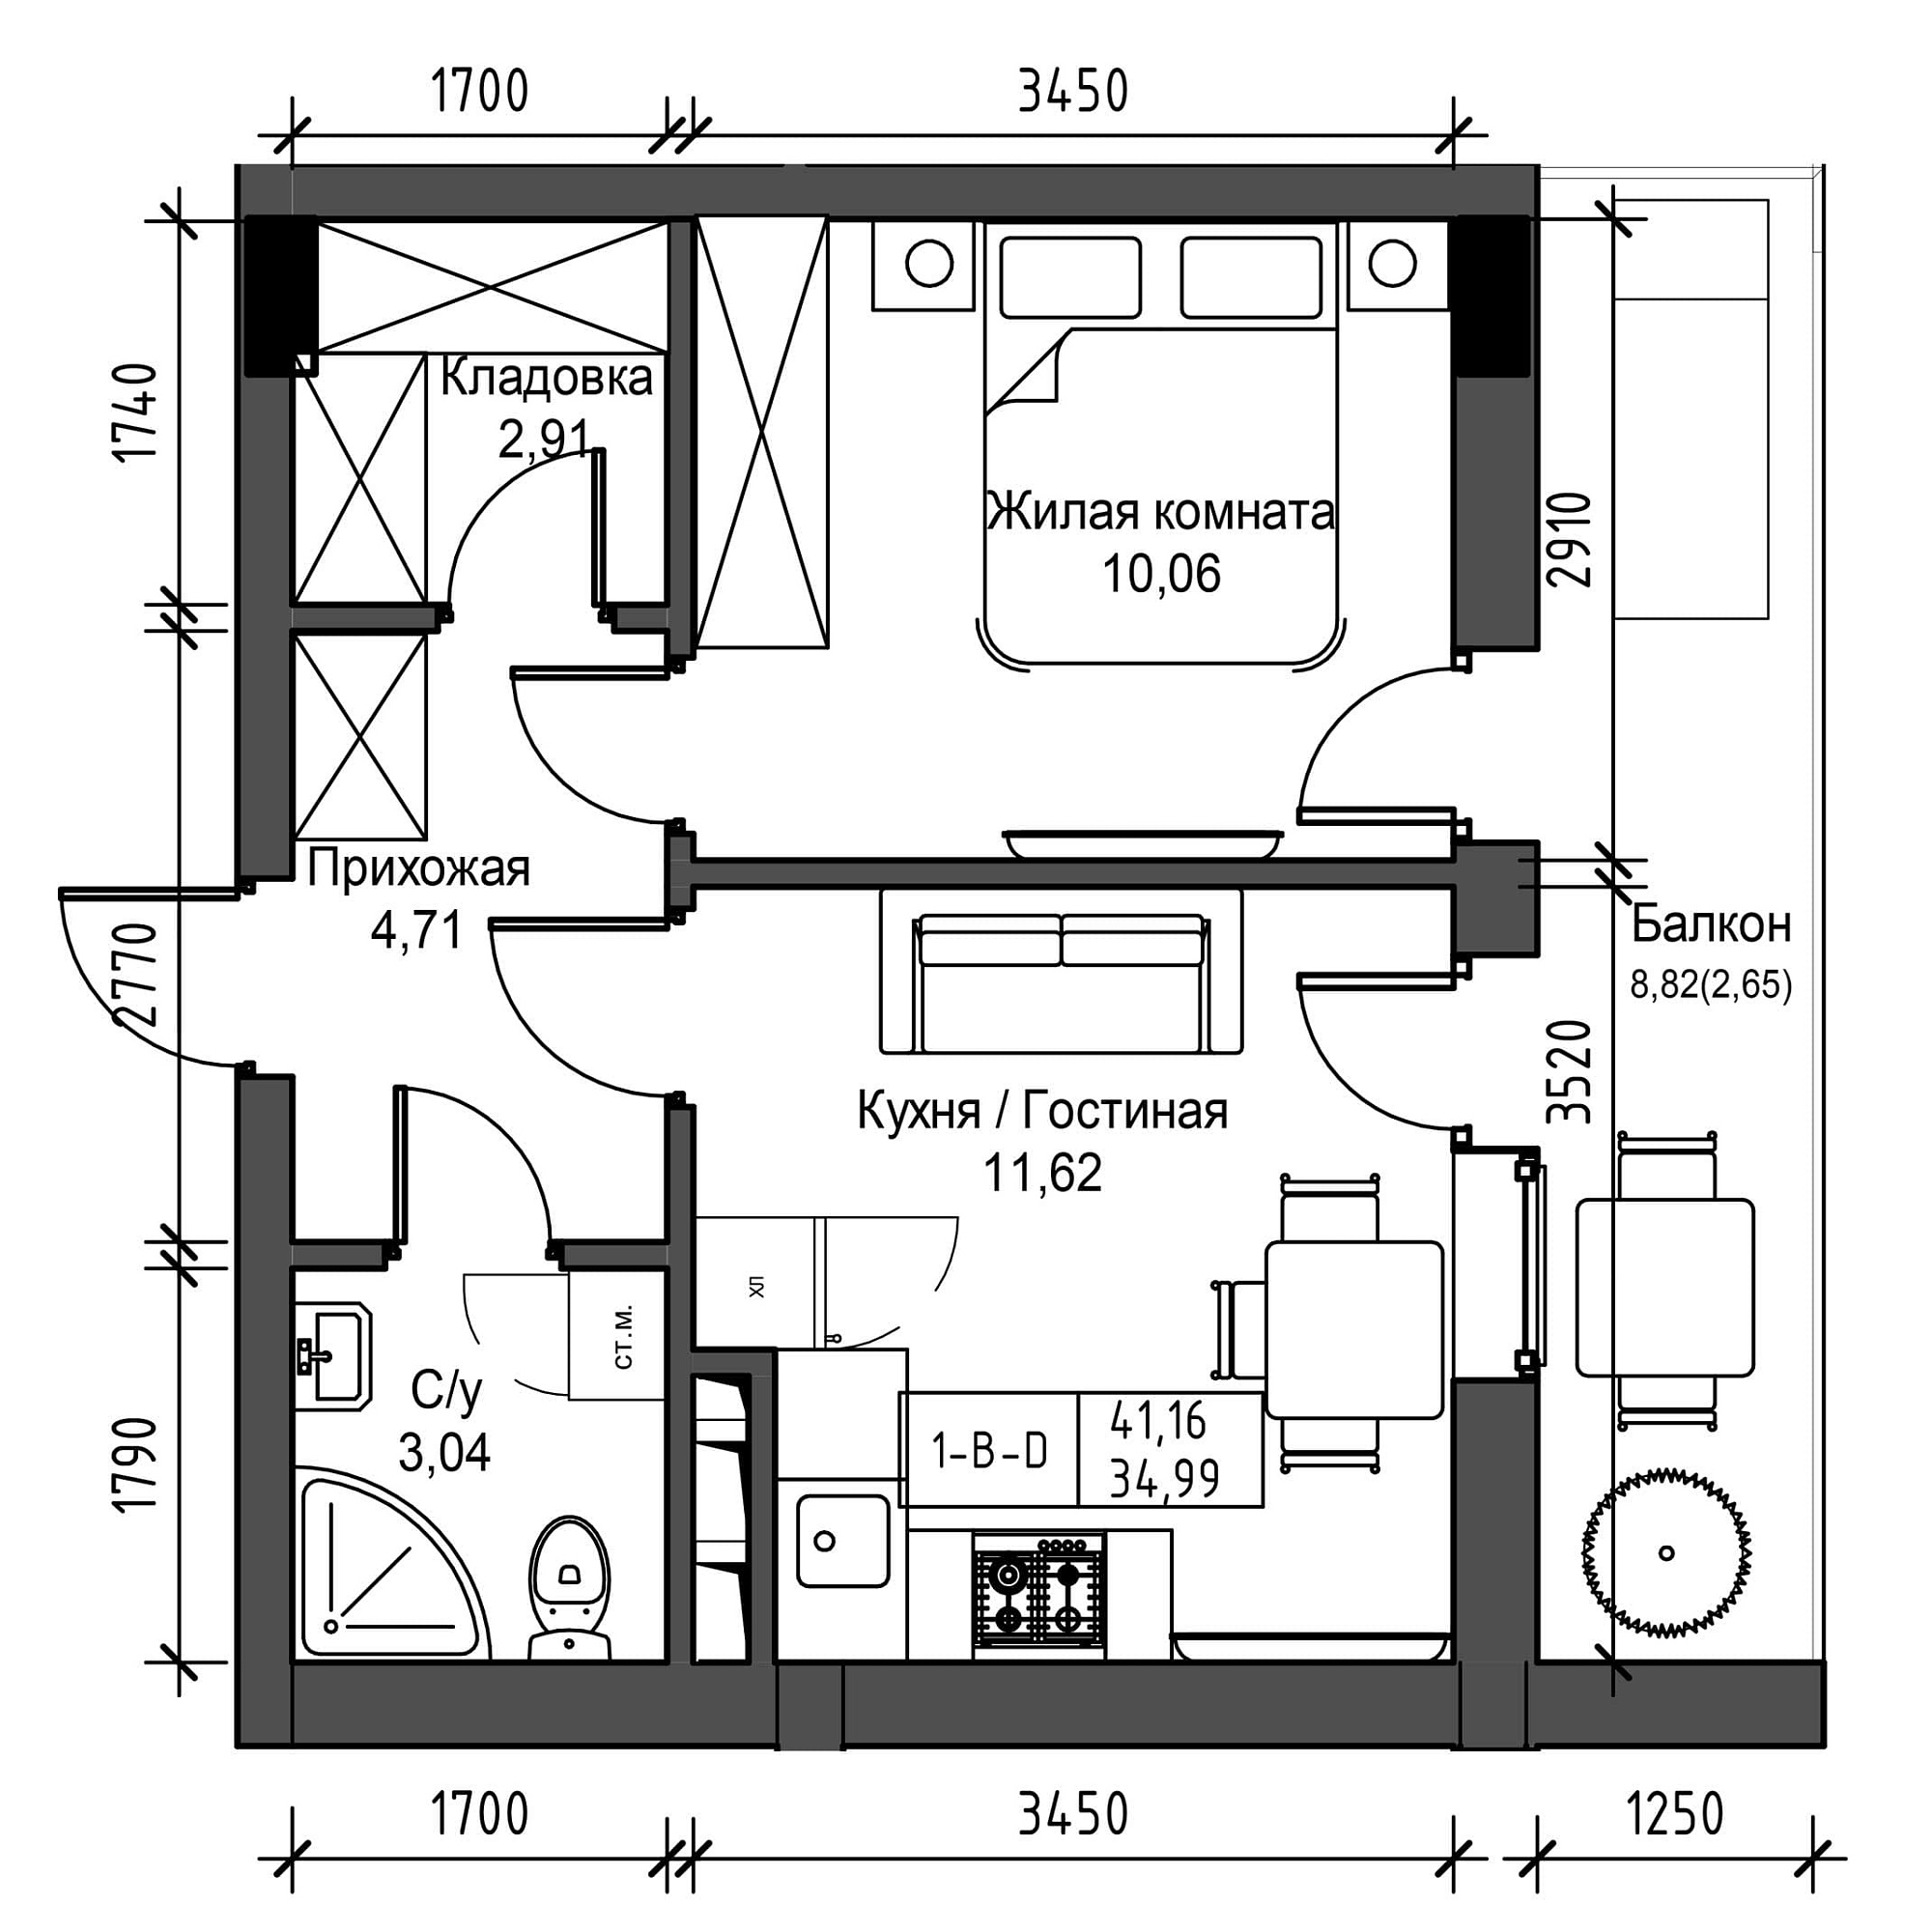 Планування 1-к квартира площею 34.99м2, UM-001-09/0024.